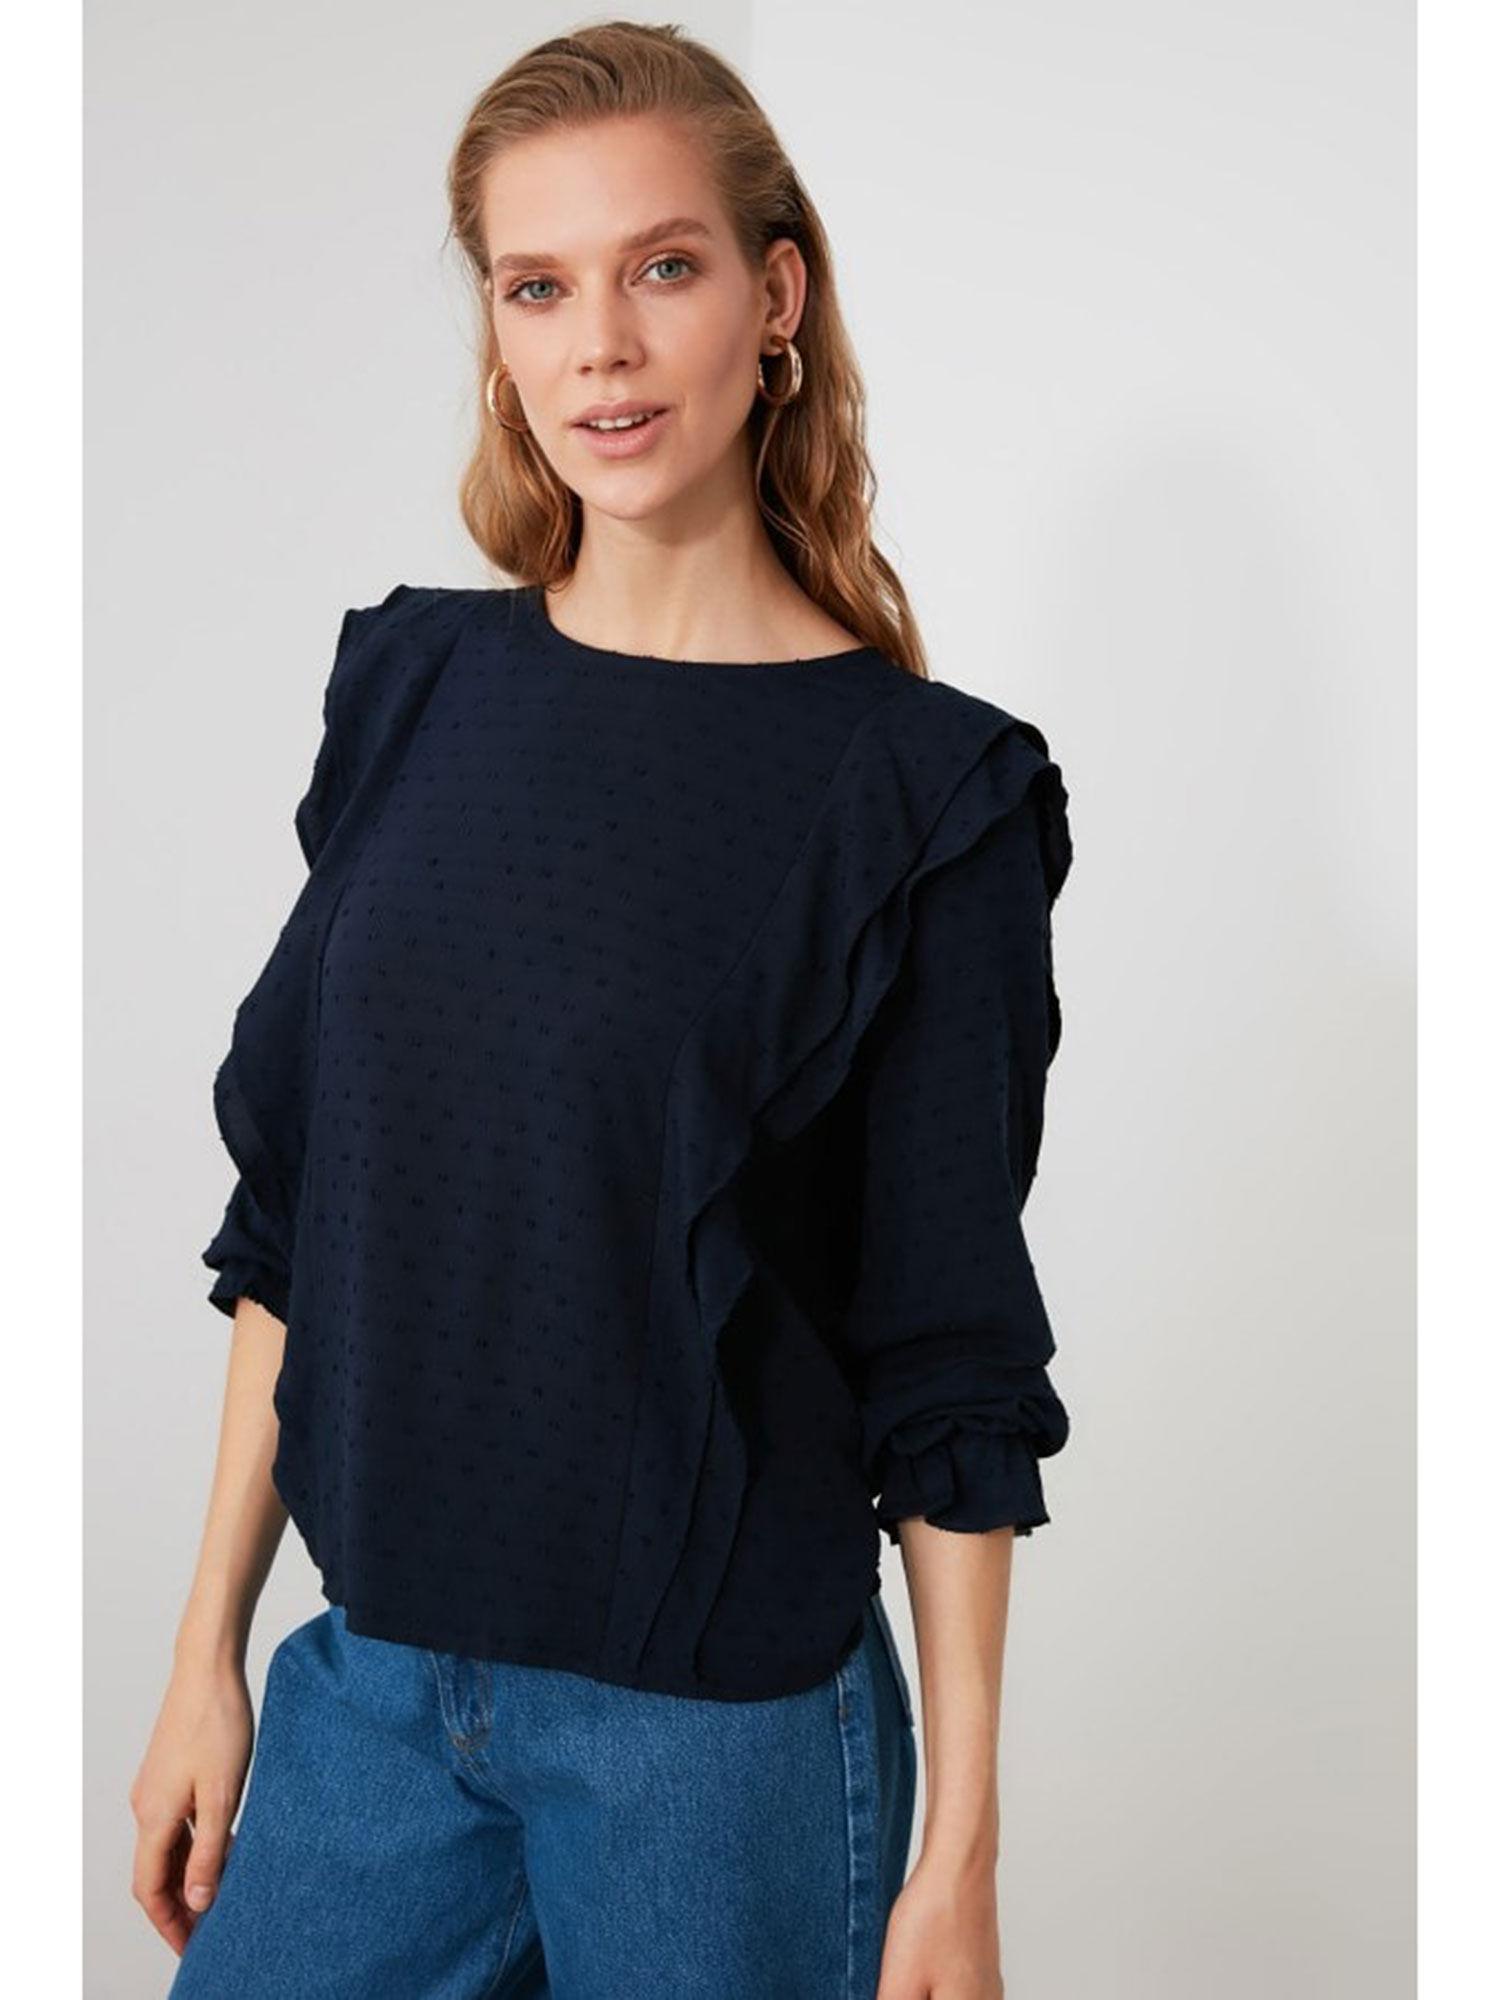 navy blue frilly blouse